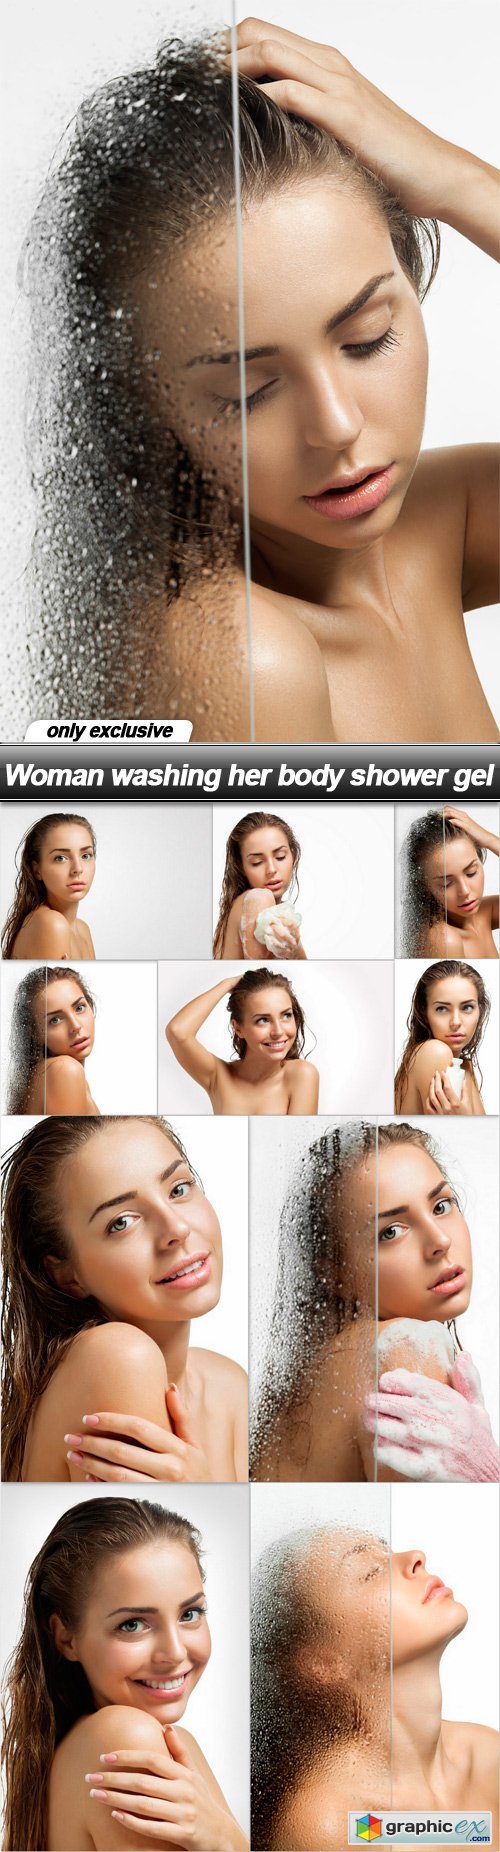 Woman washing her body shower gel - 10 UHQ JPEG